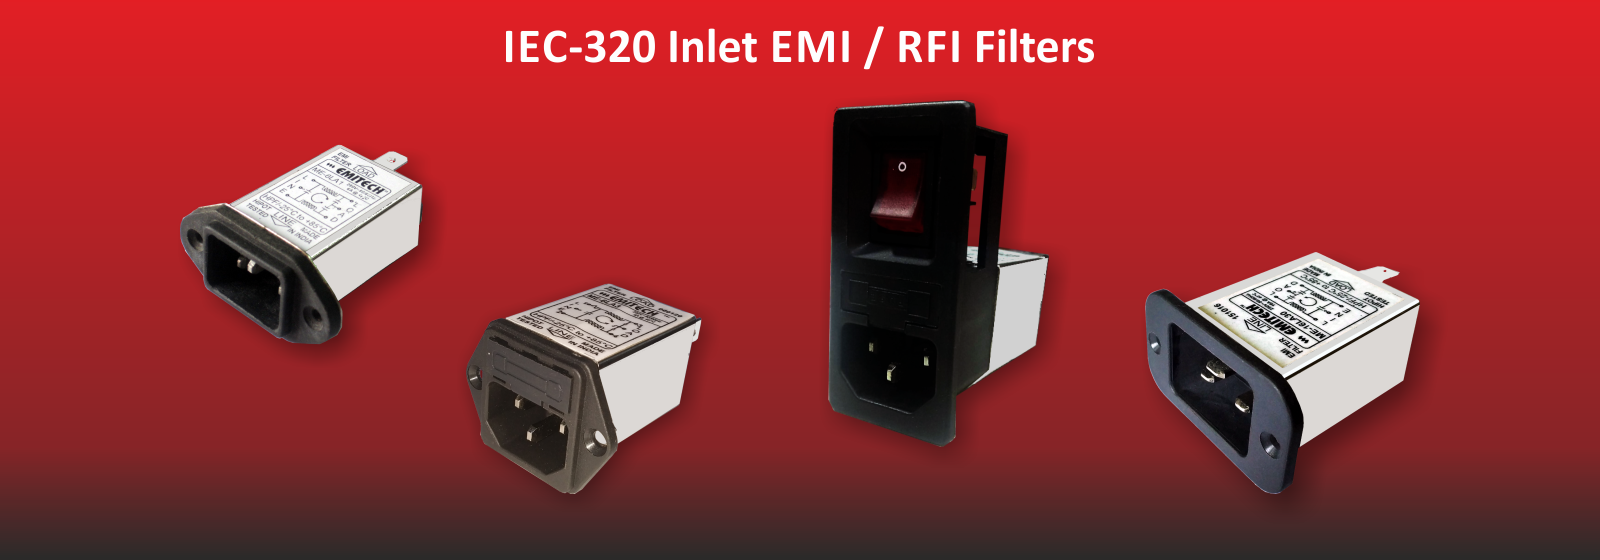 IEC-320 EMI Filter